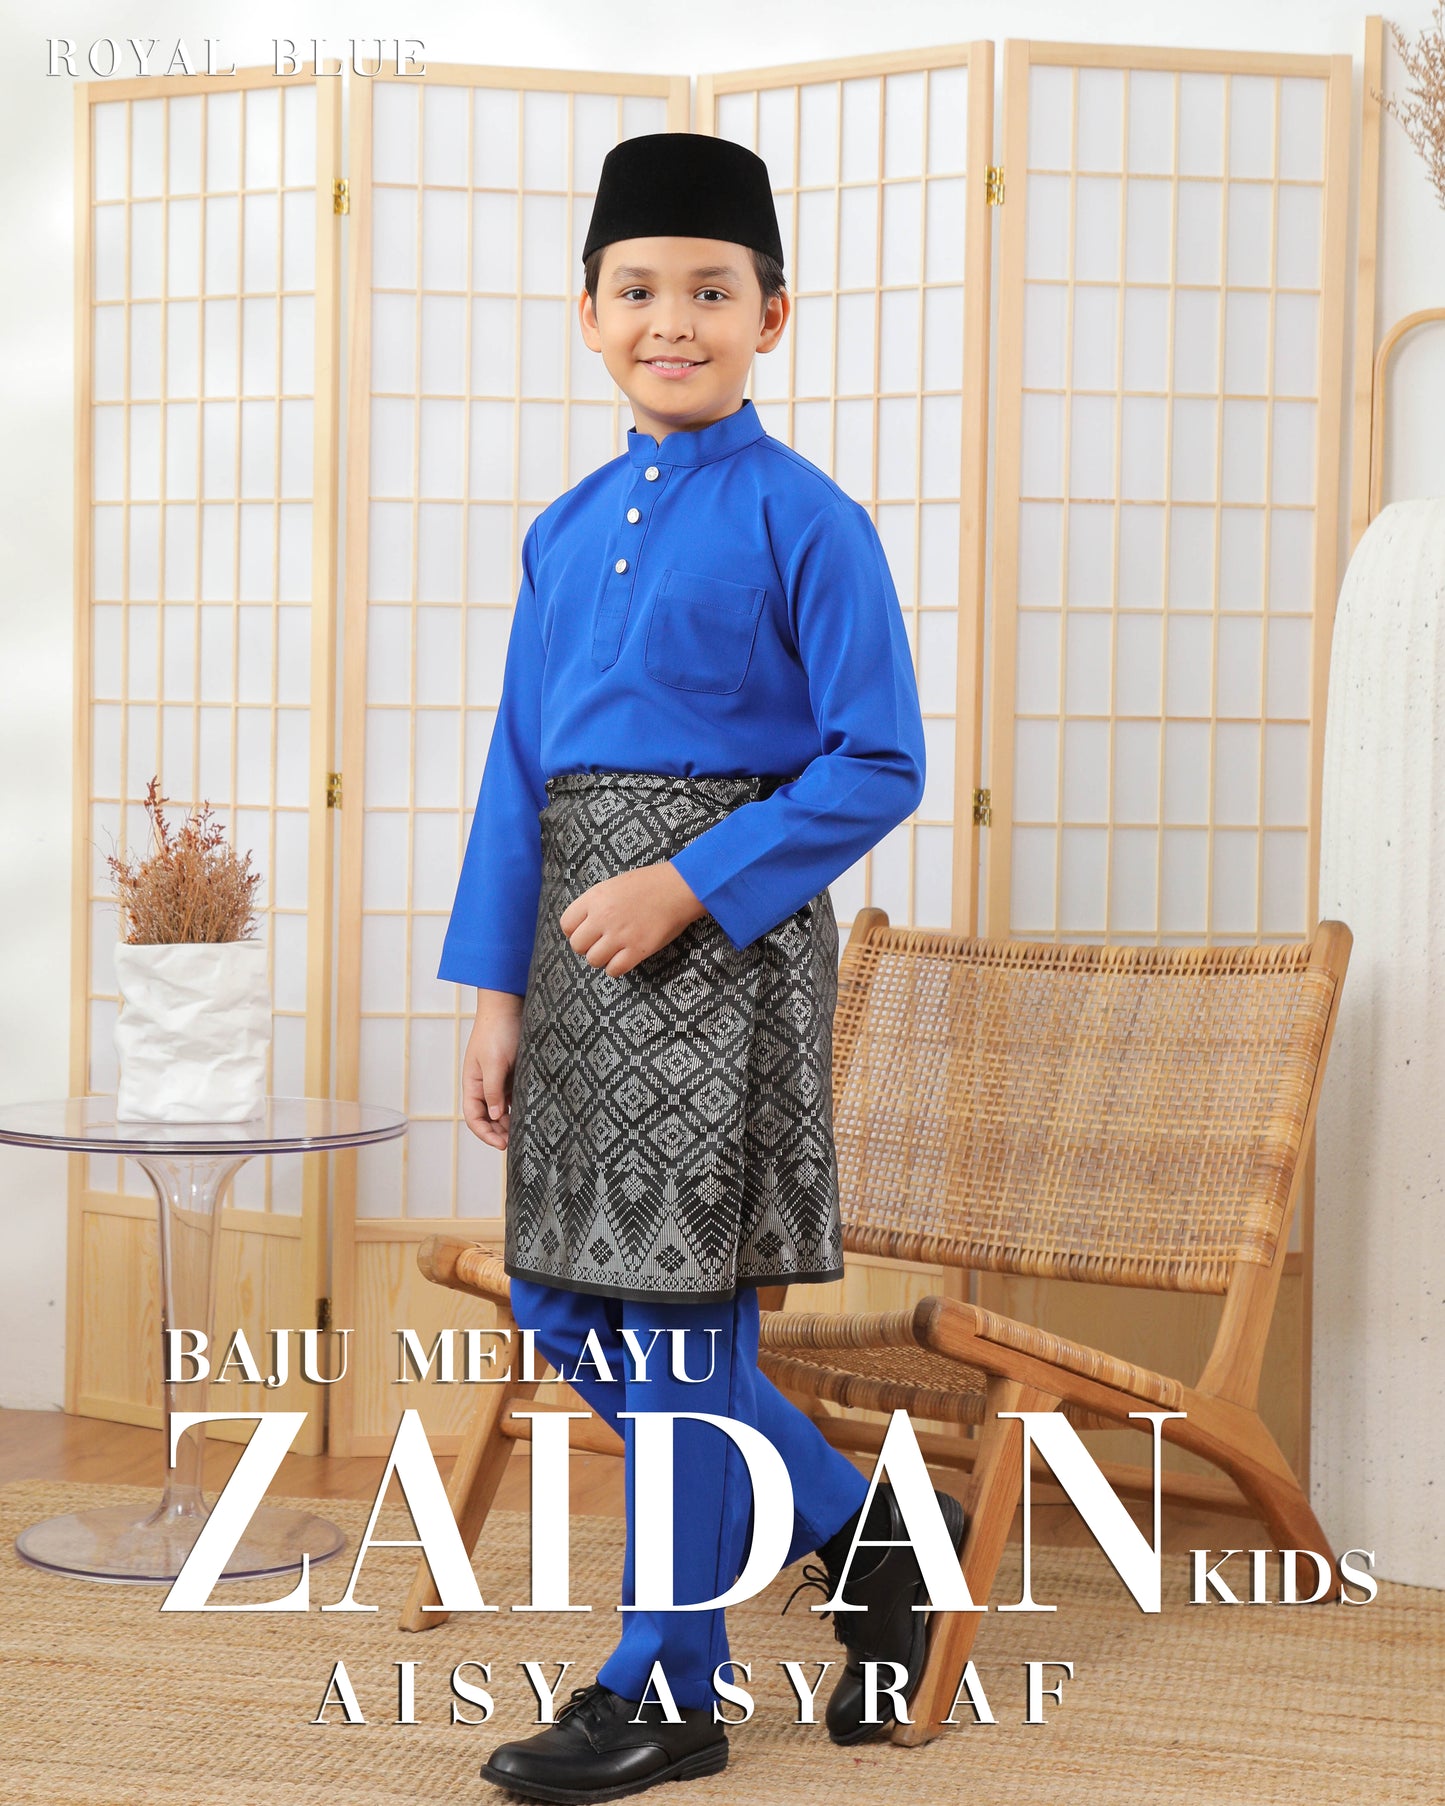 Baju Melayu Zaidan Kids - Royal Blue